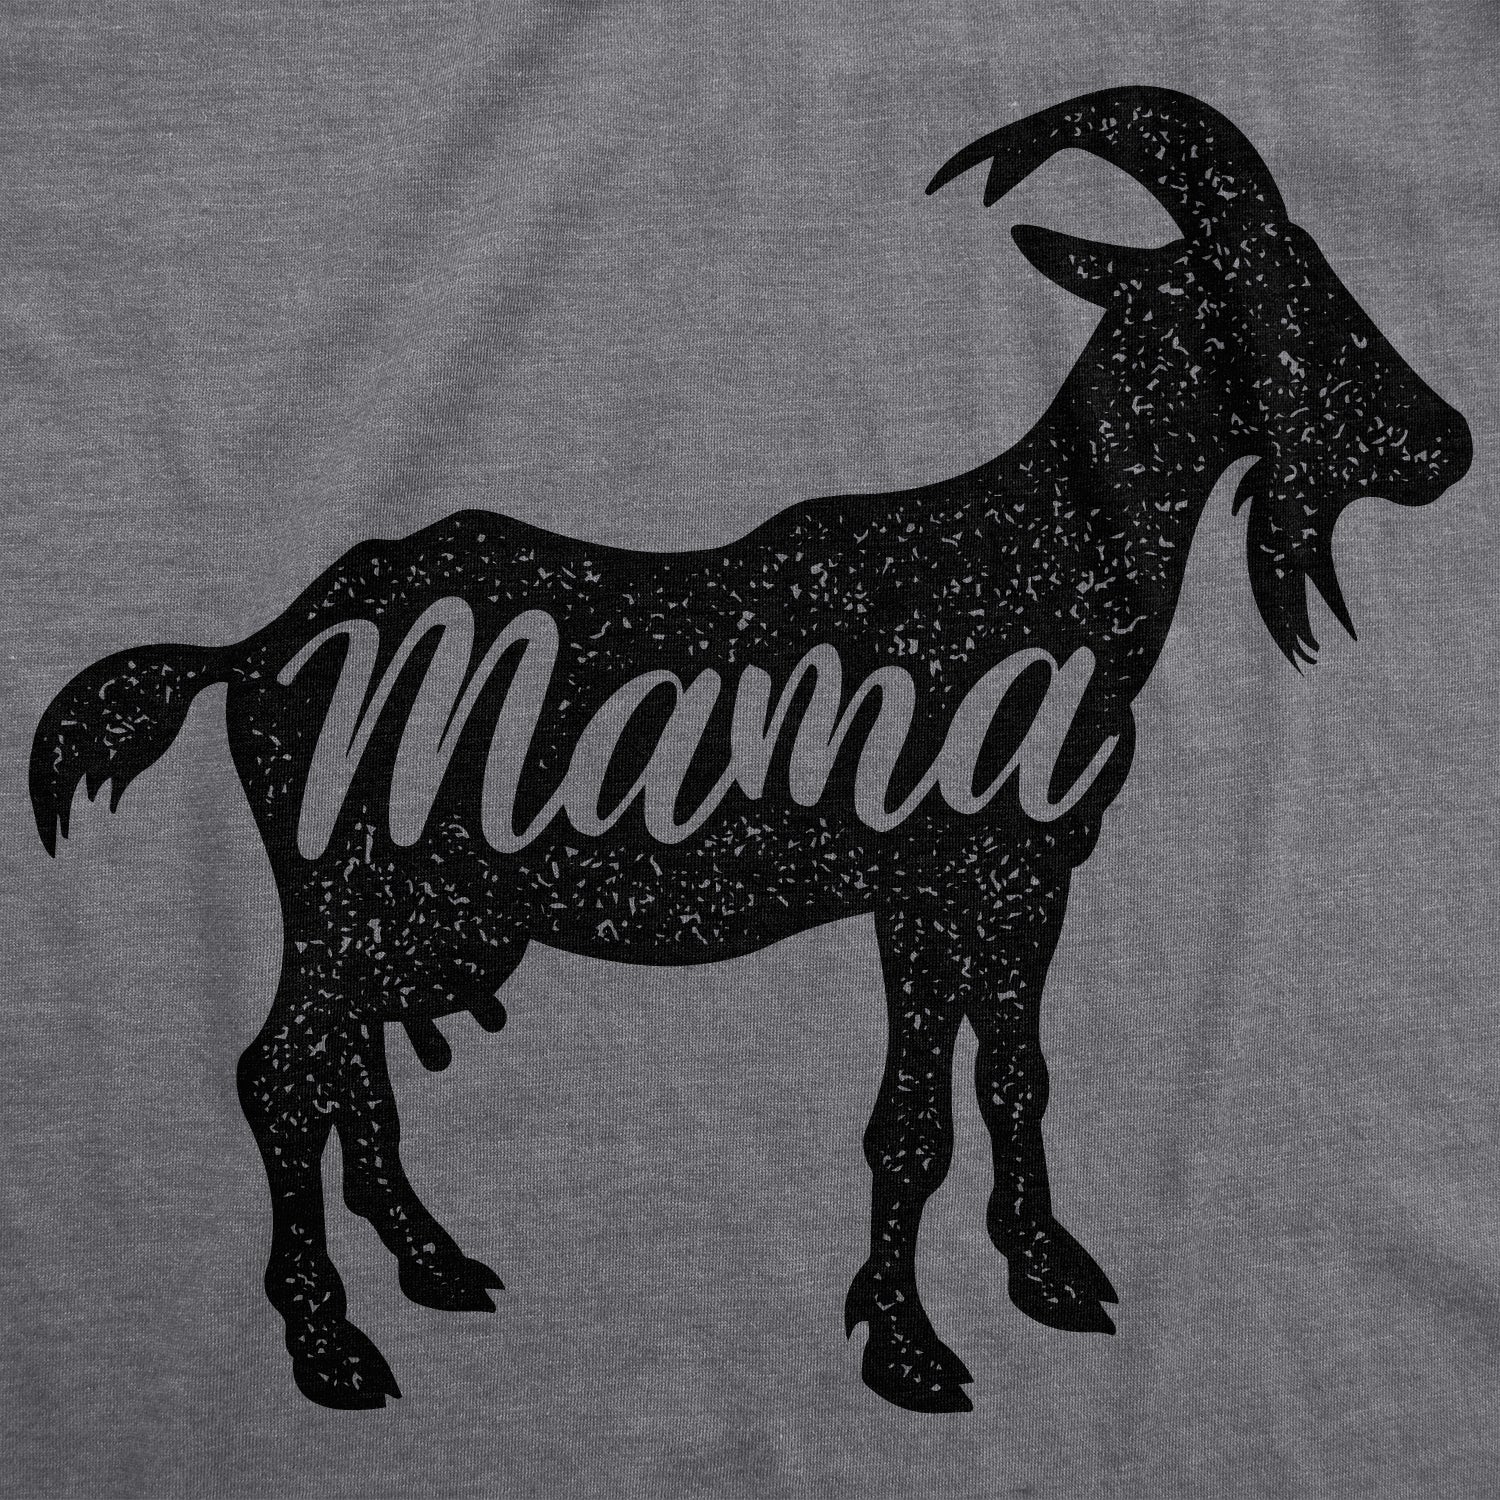 Funny Dark Heather Grey - Mama Goat Mama Goat Womens T Shirt Nerdy Mother's Day Animal Tee